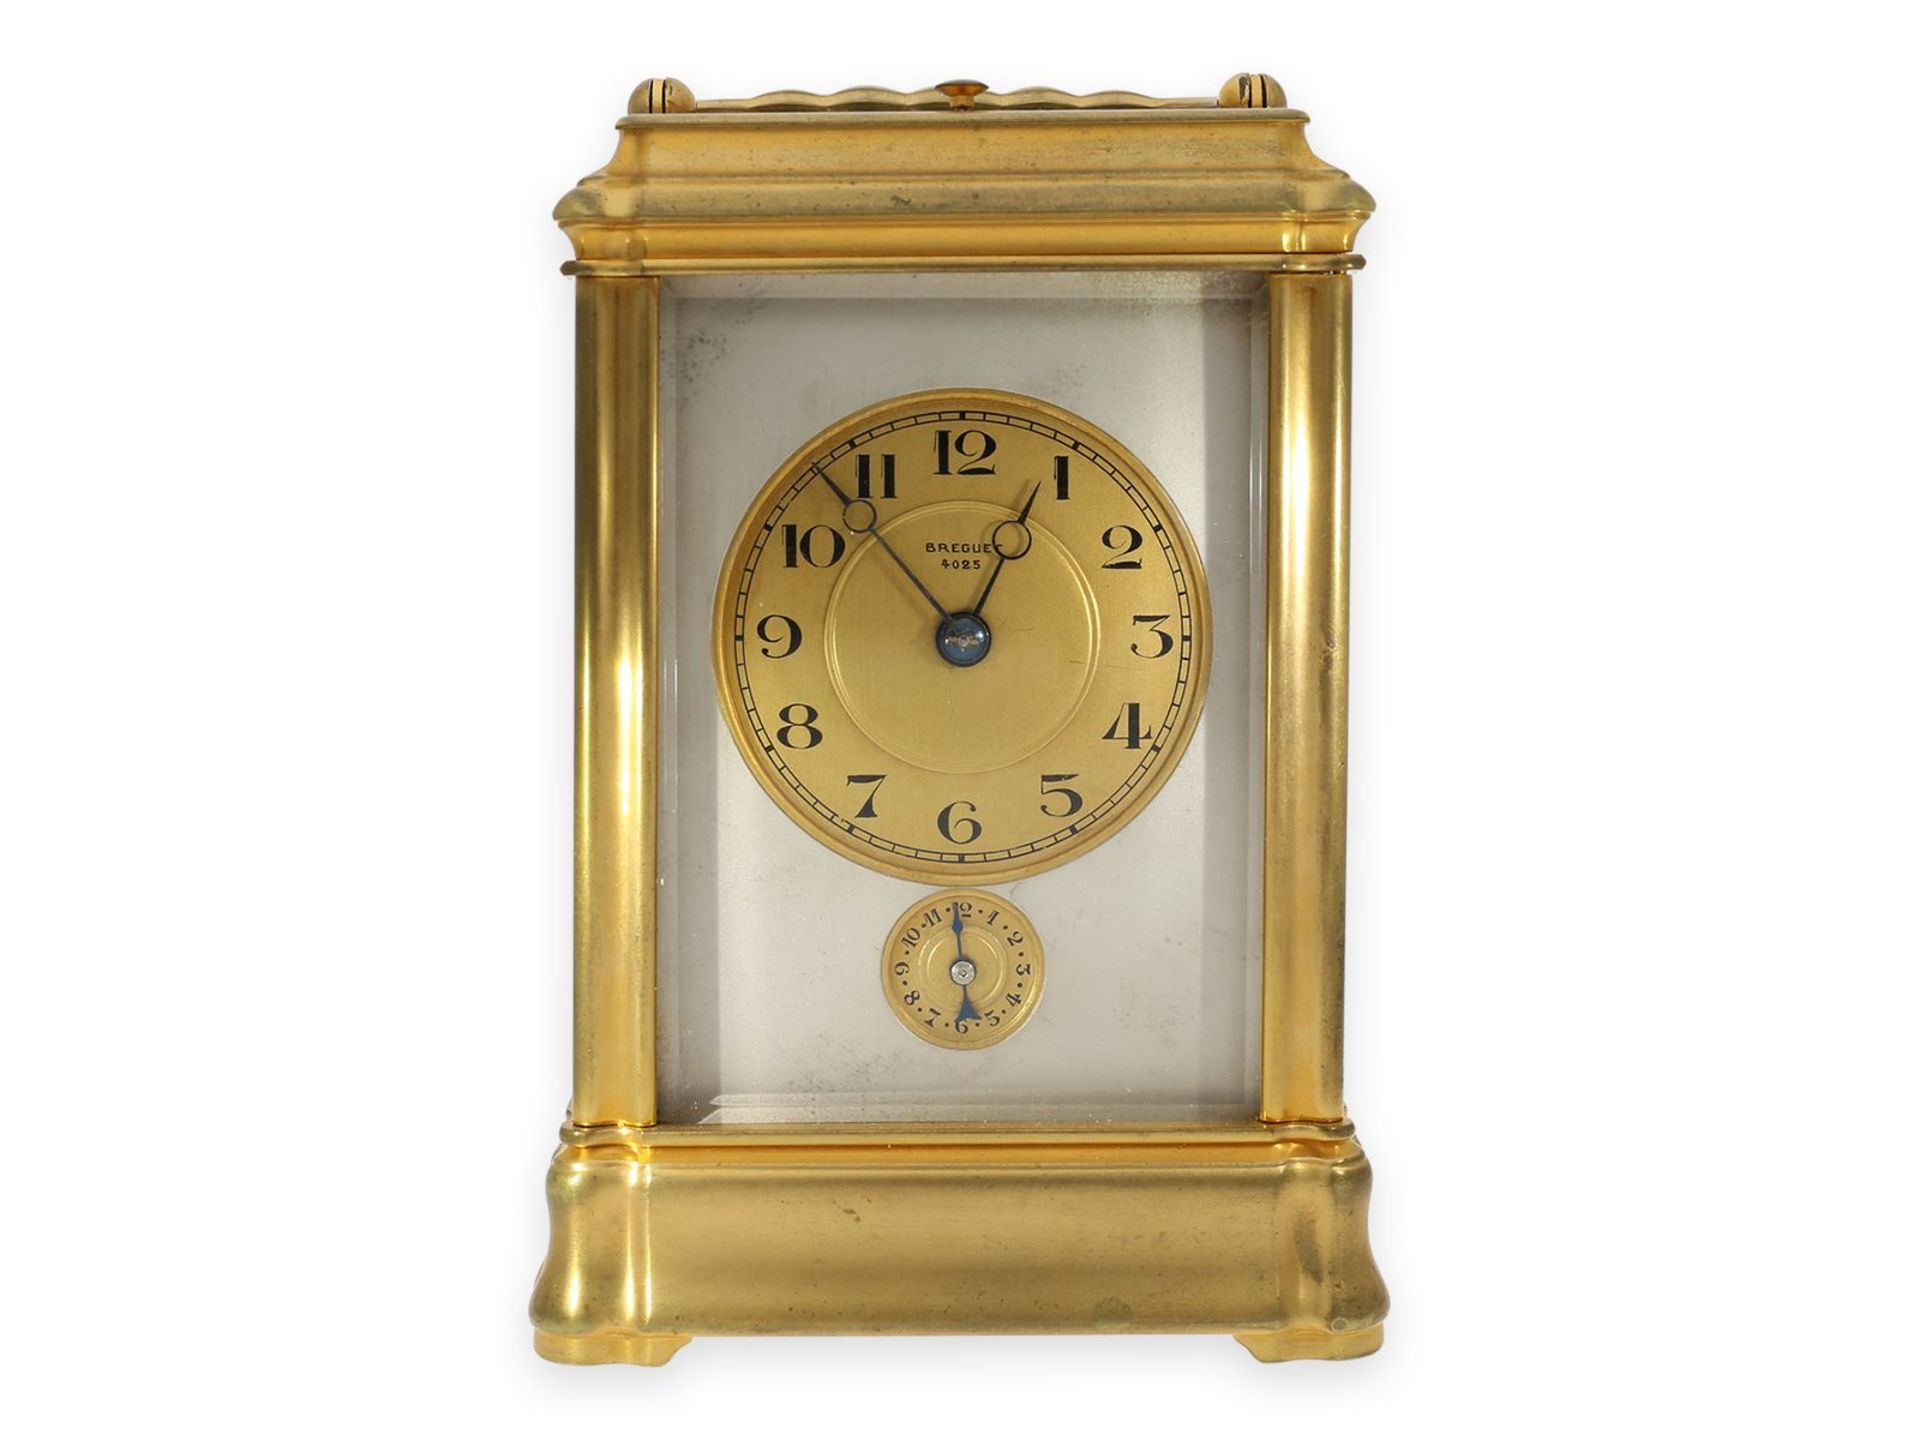 Travel clock: exquisite travel clock with sonnerie, repeater and alarm, Breguet Paris No.4025, ca. 1